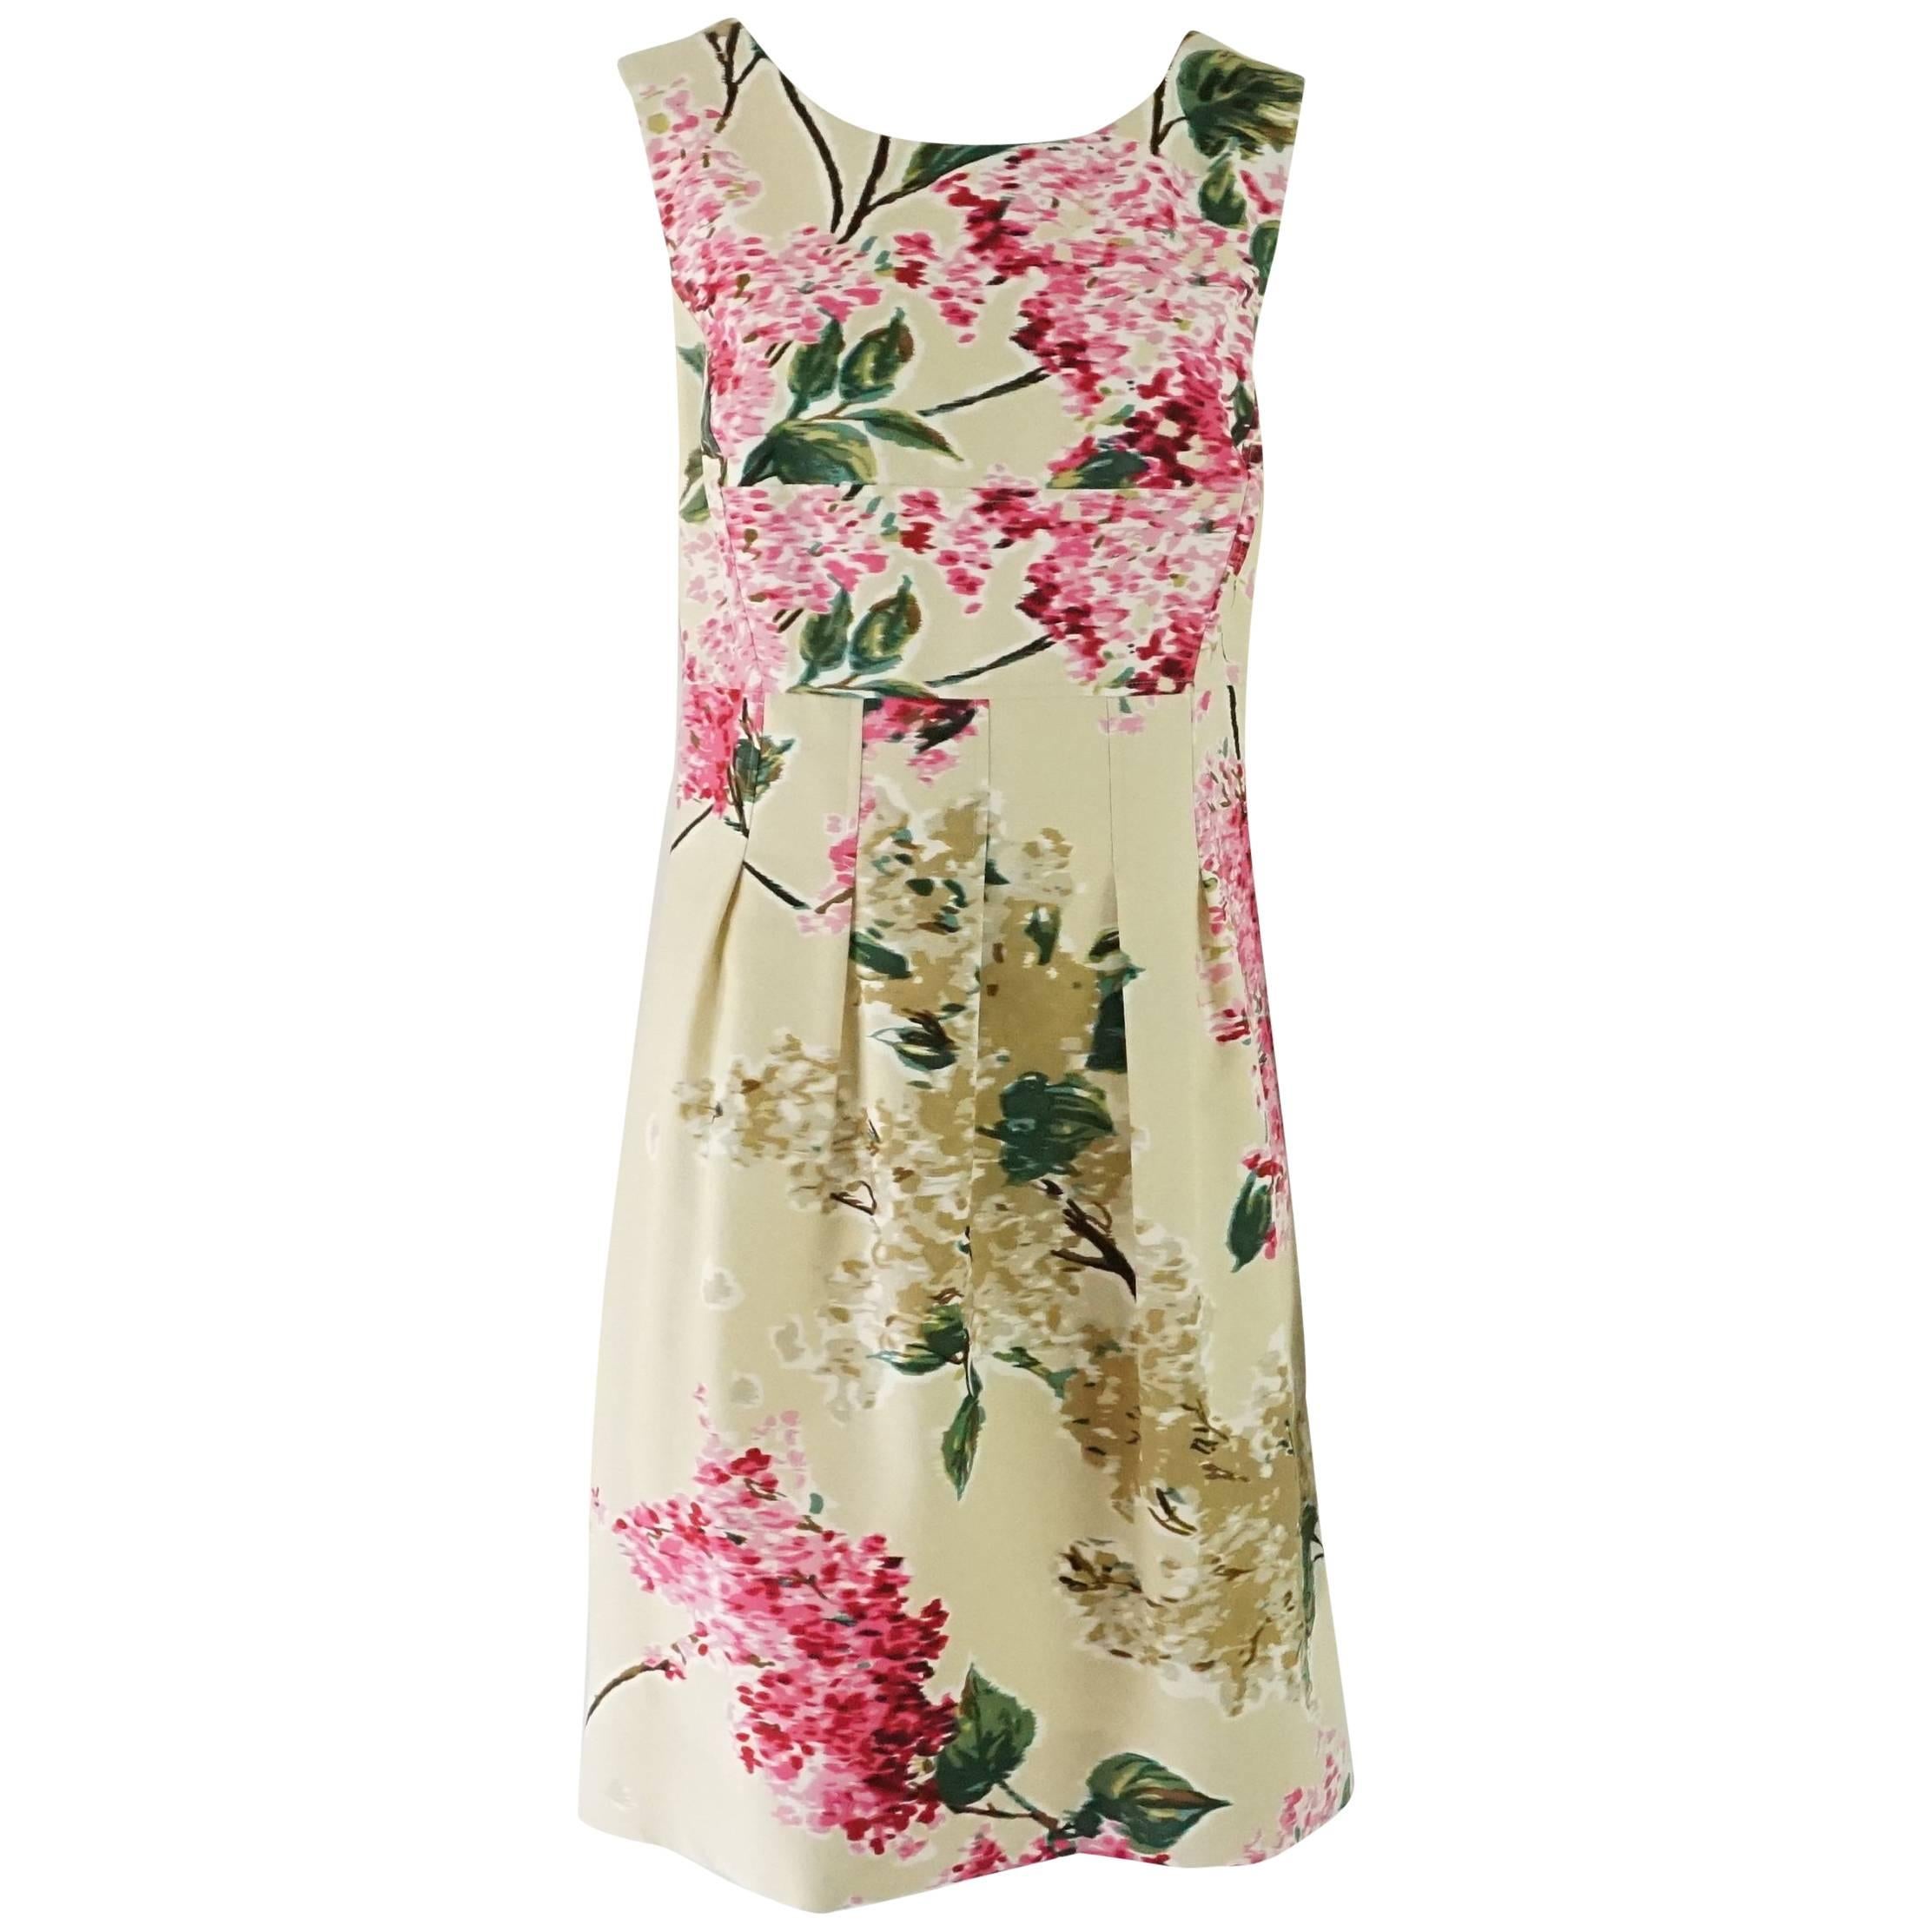 Lela Rose Tan and Pink Floral Print Sleeveless Dress - 6